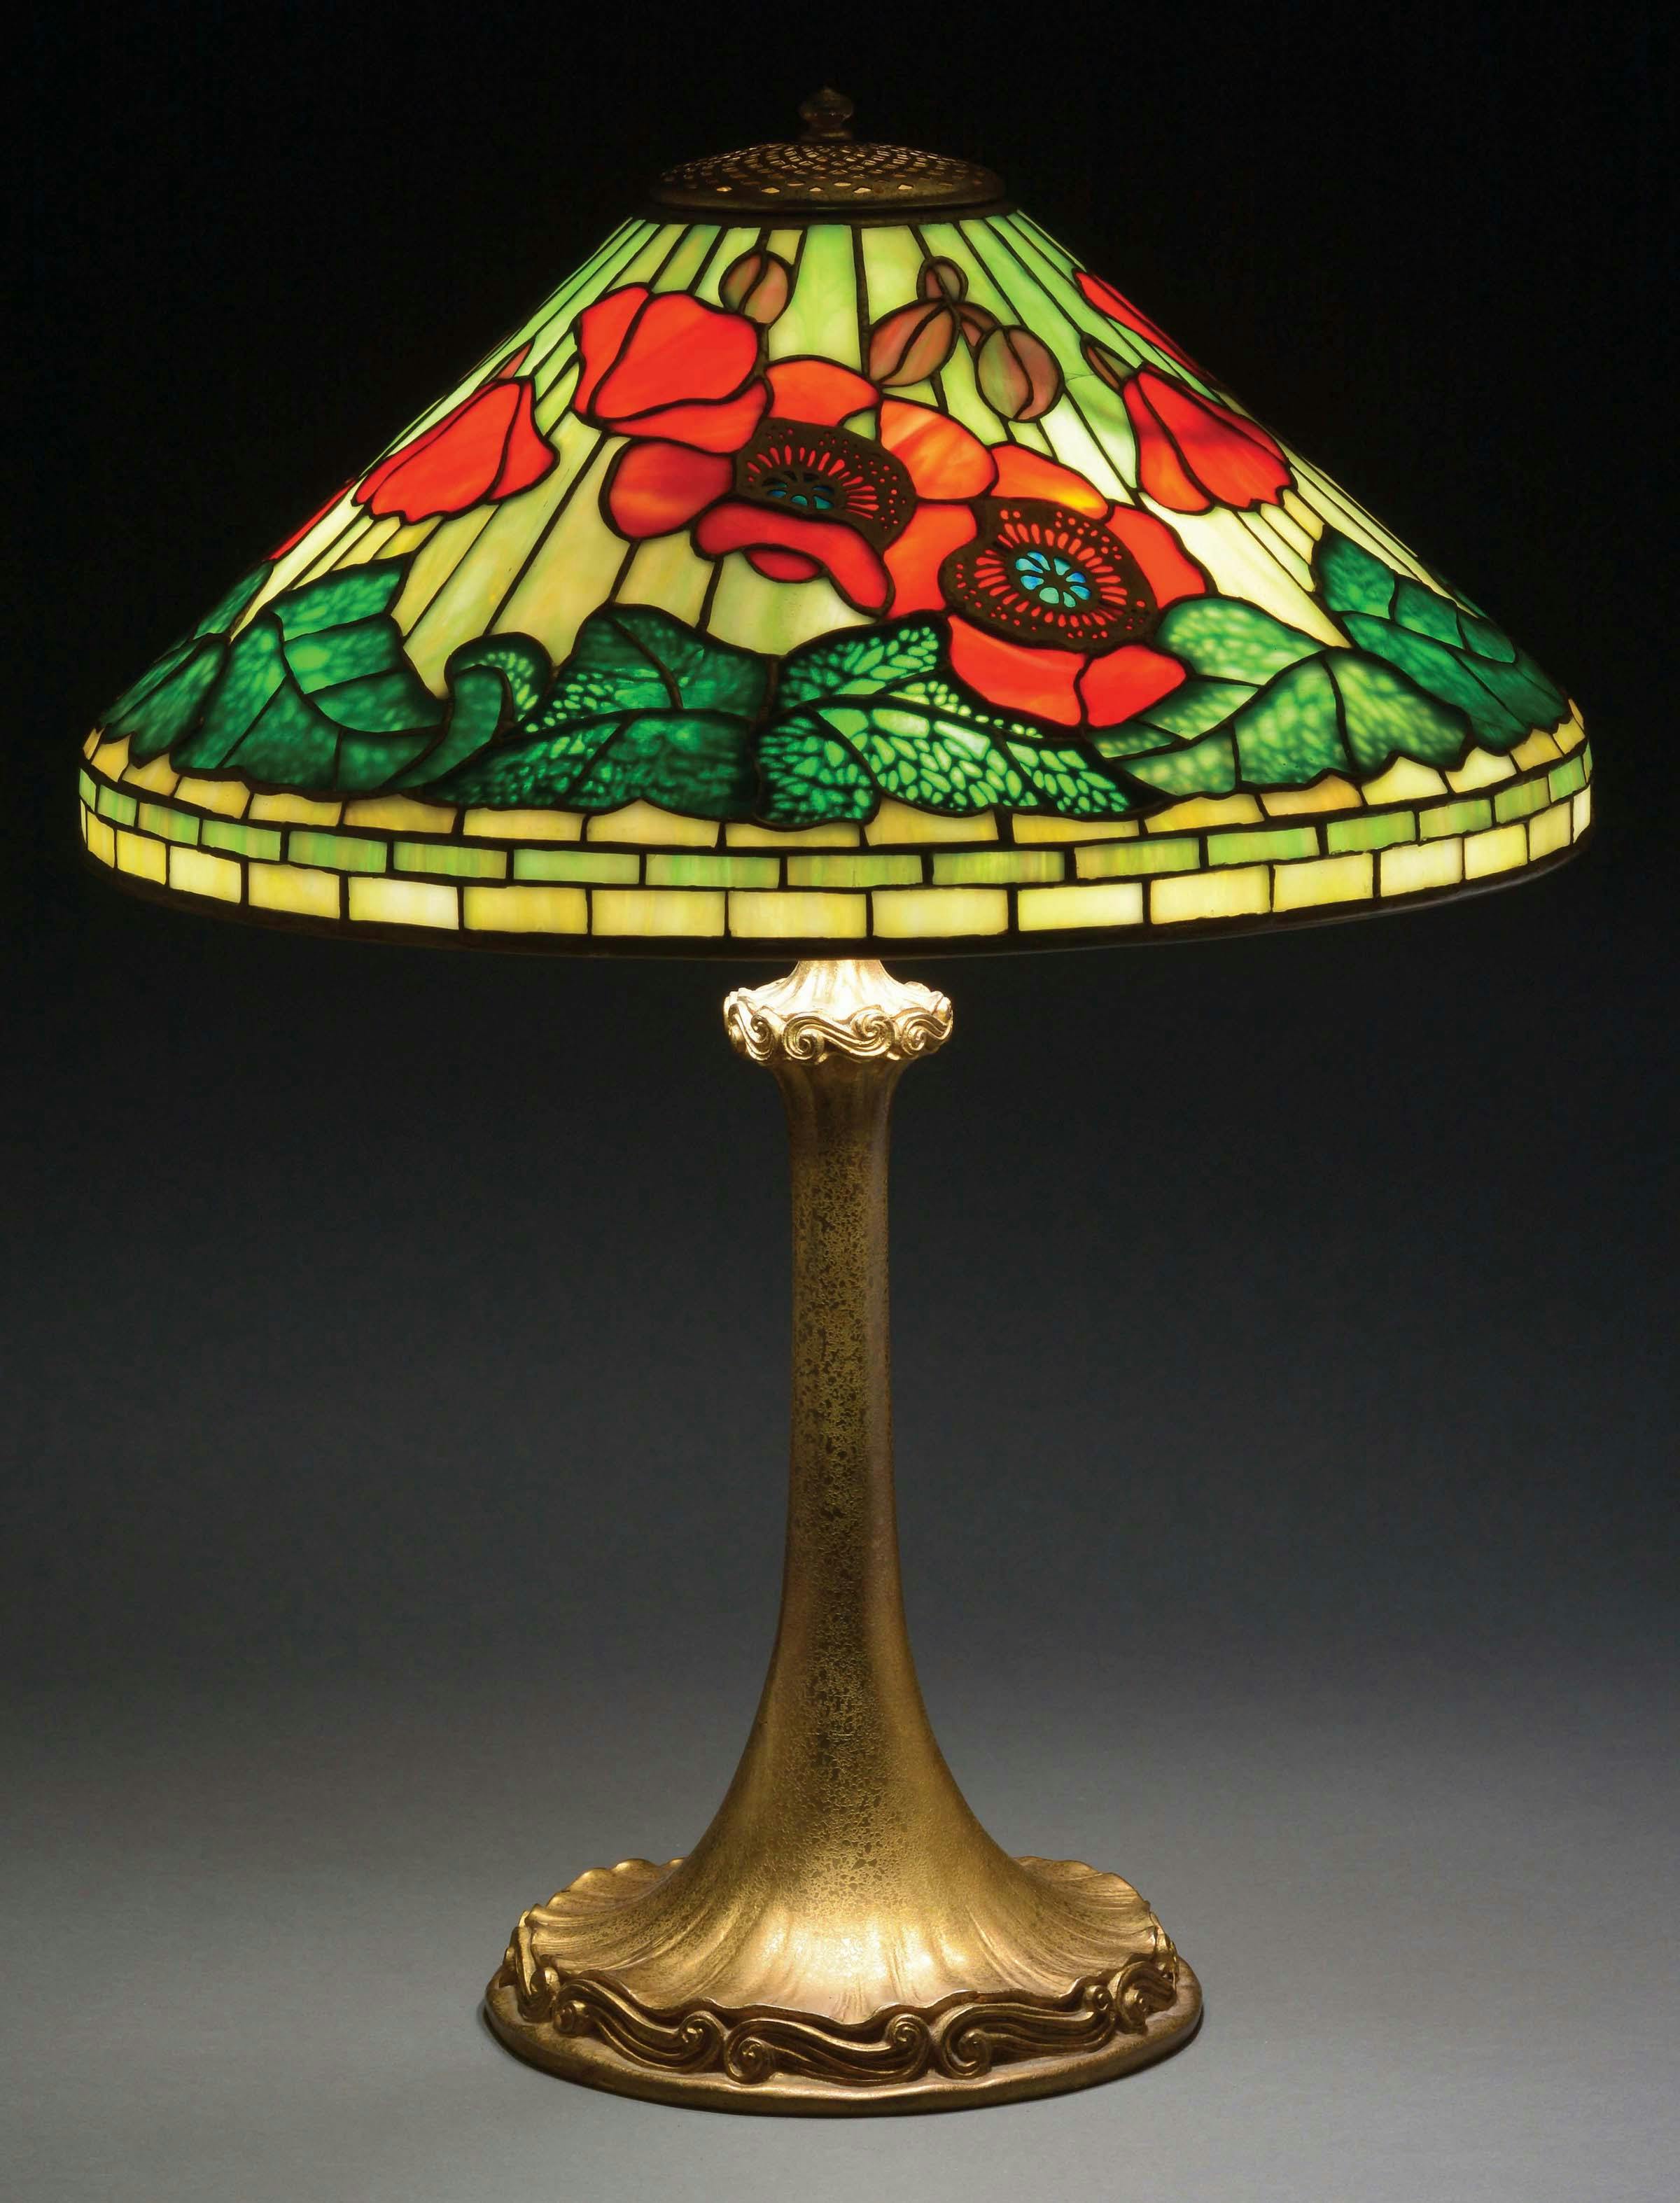 Tiffany Lamps, the icons of American Art Nouveau - Art Nouveau Club